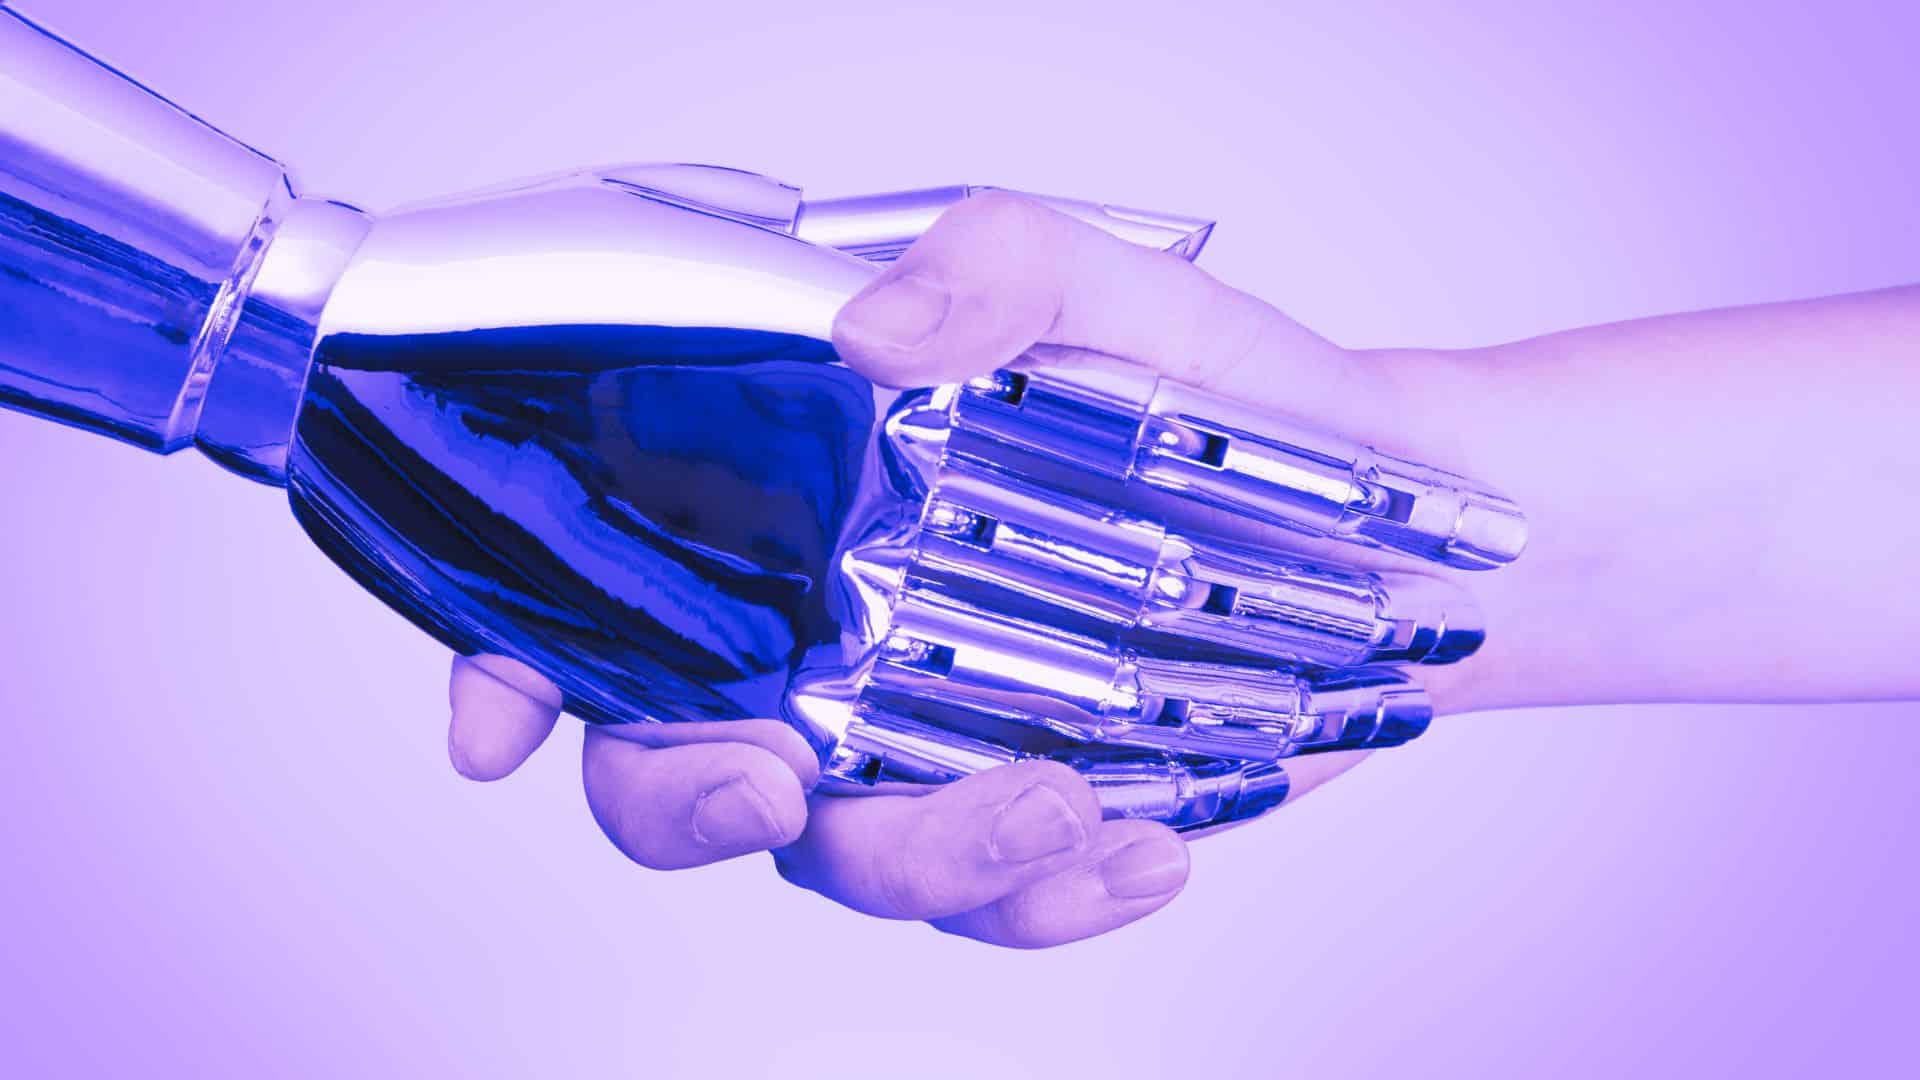 Menneskehånden og robotten samarbejder, forener teknologi og menneskelig kreativitet.